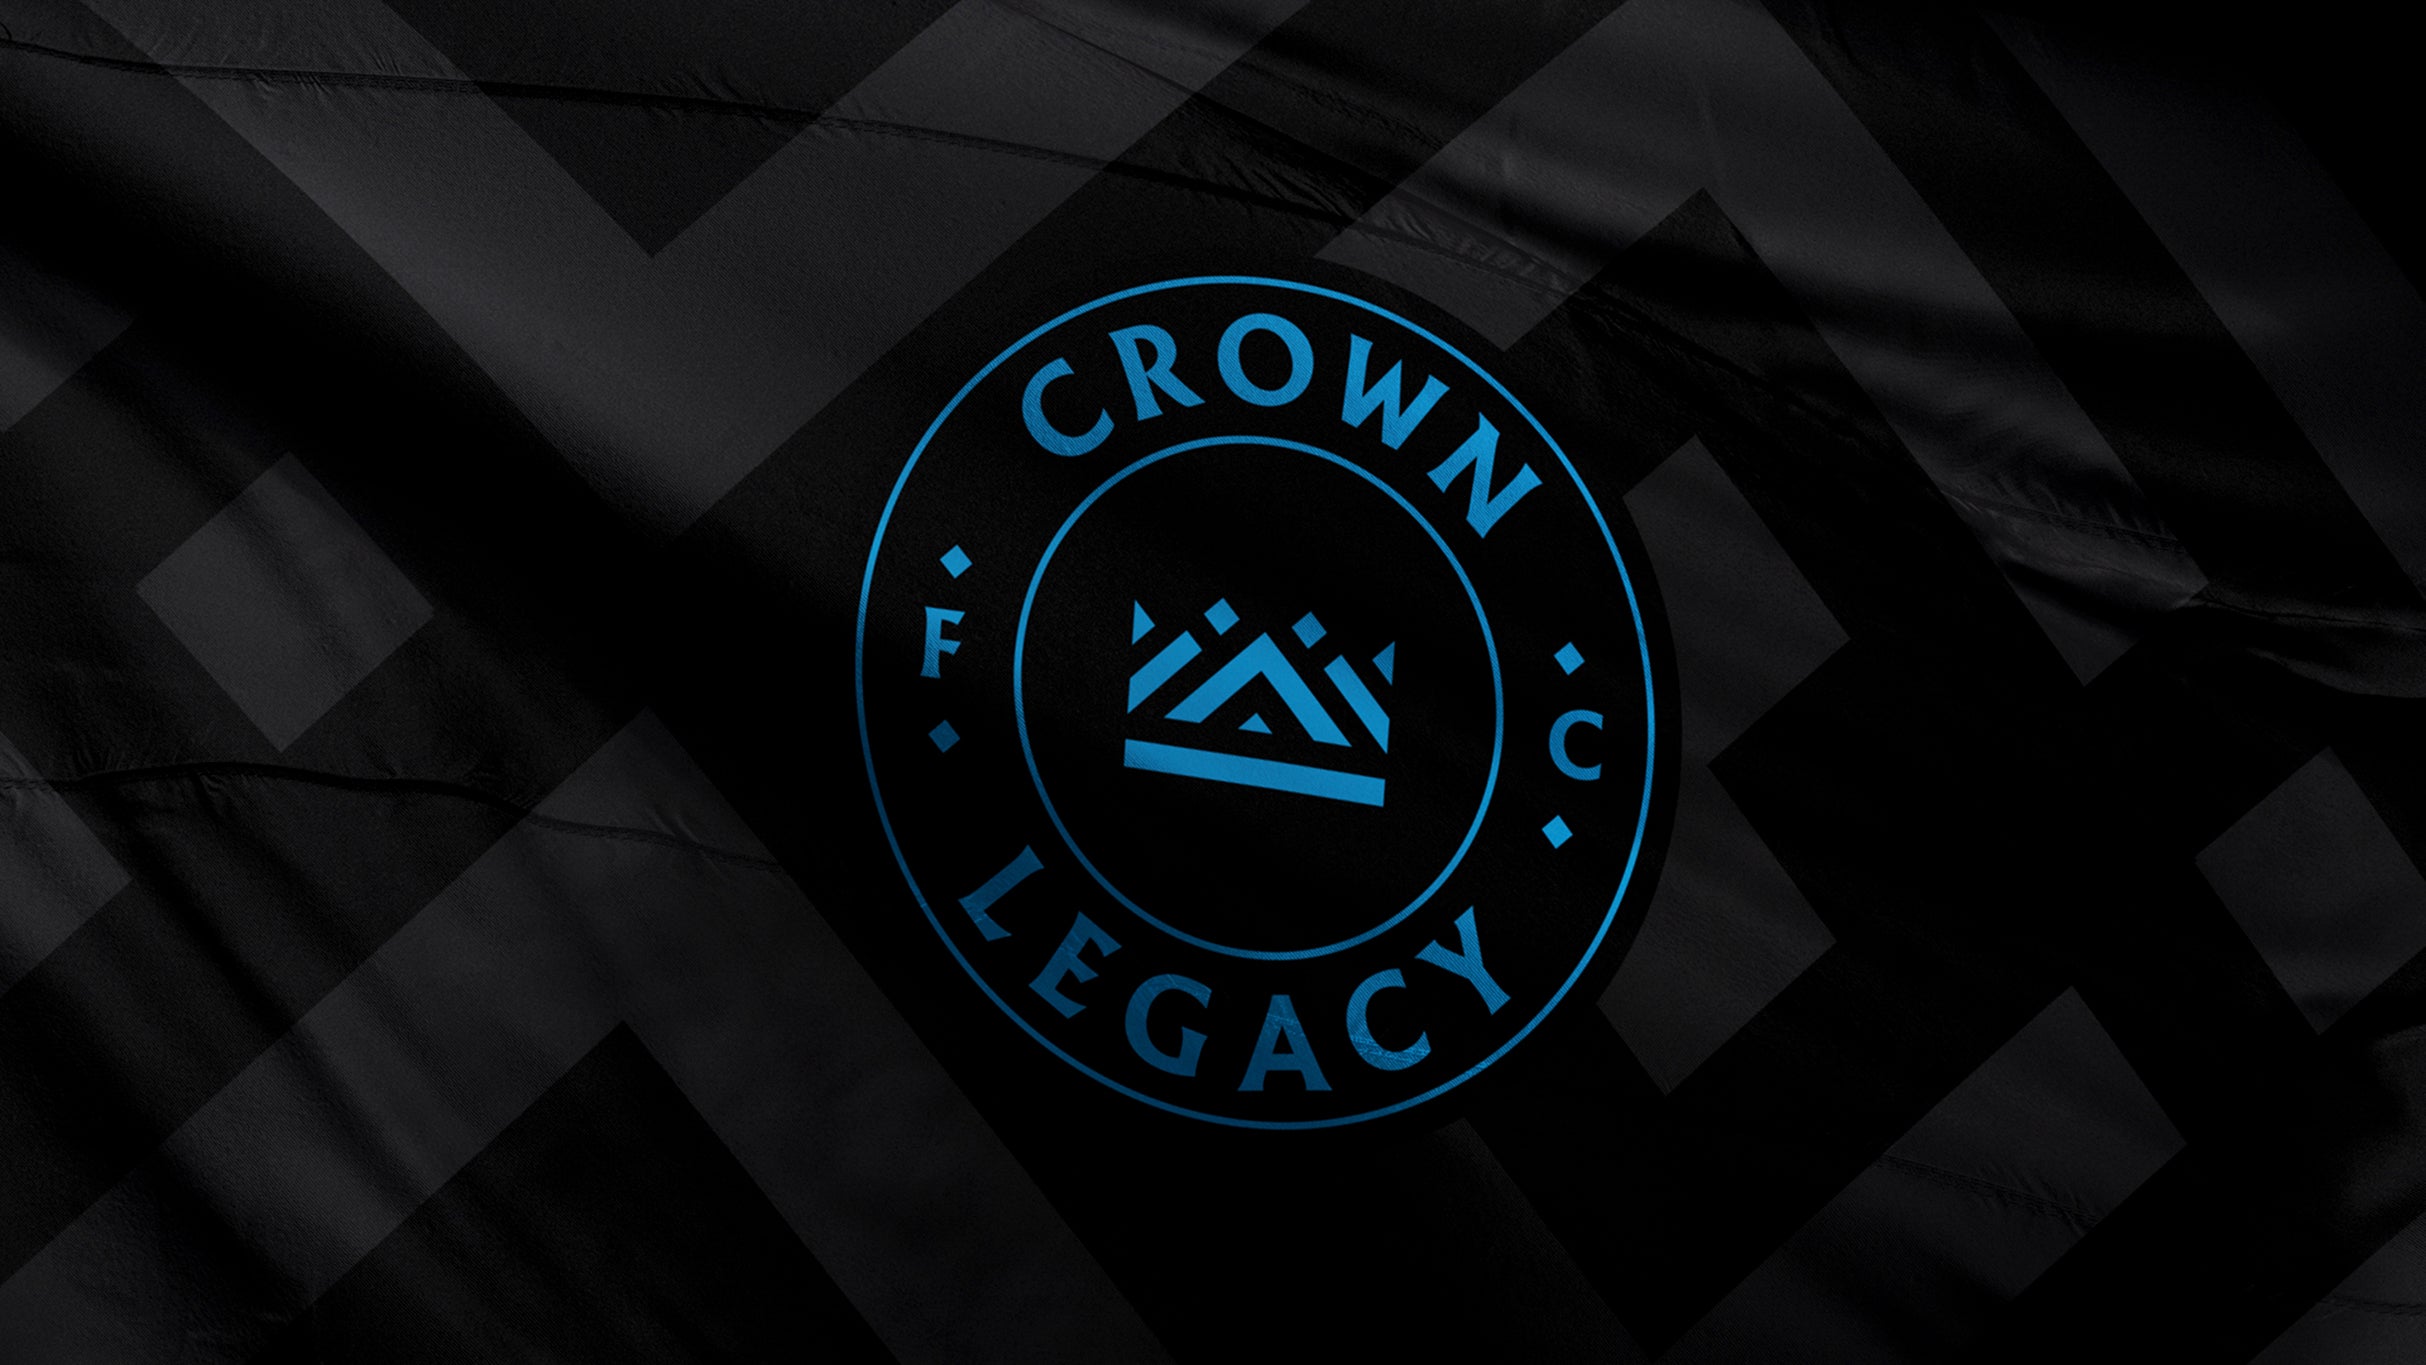 Crown Legacy FC vs. Atlanta United 2